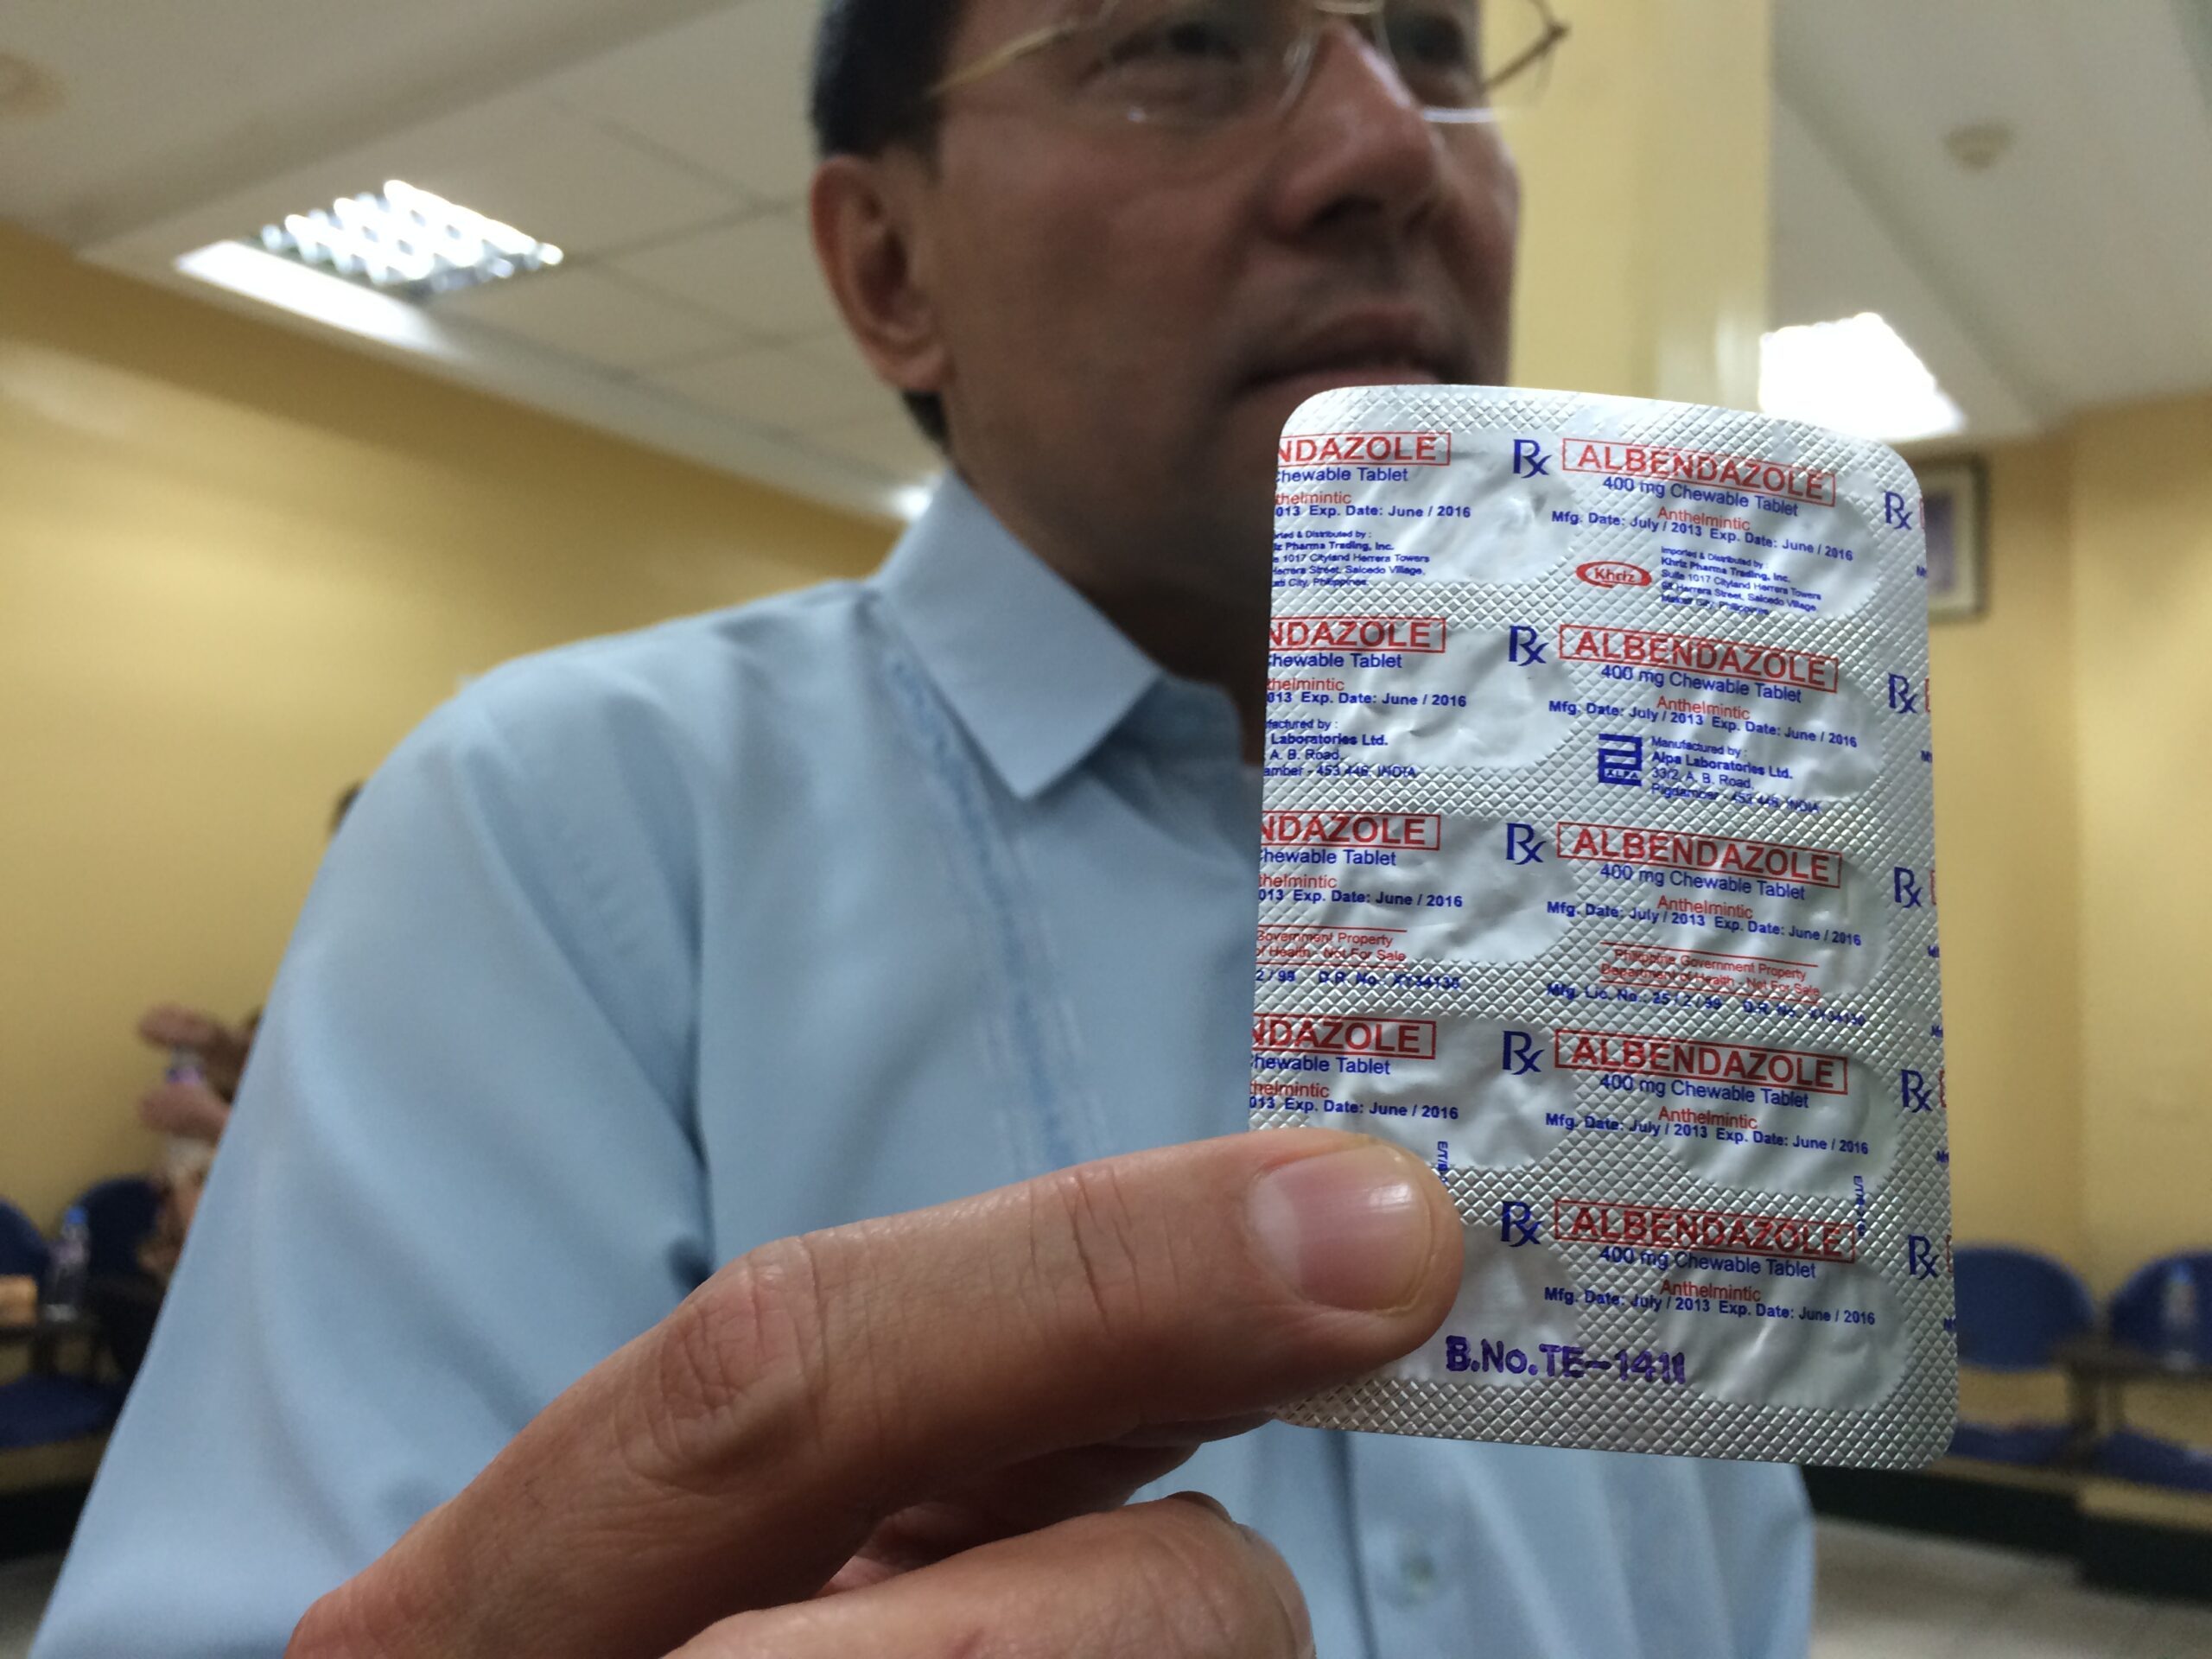 DOH looks into ‘expired’ deworming medicine claim